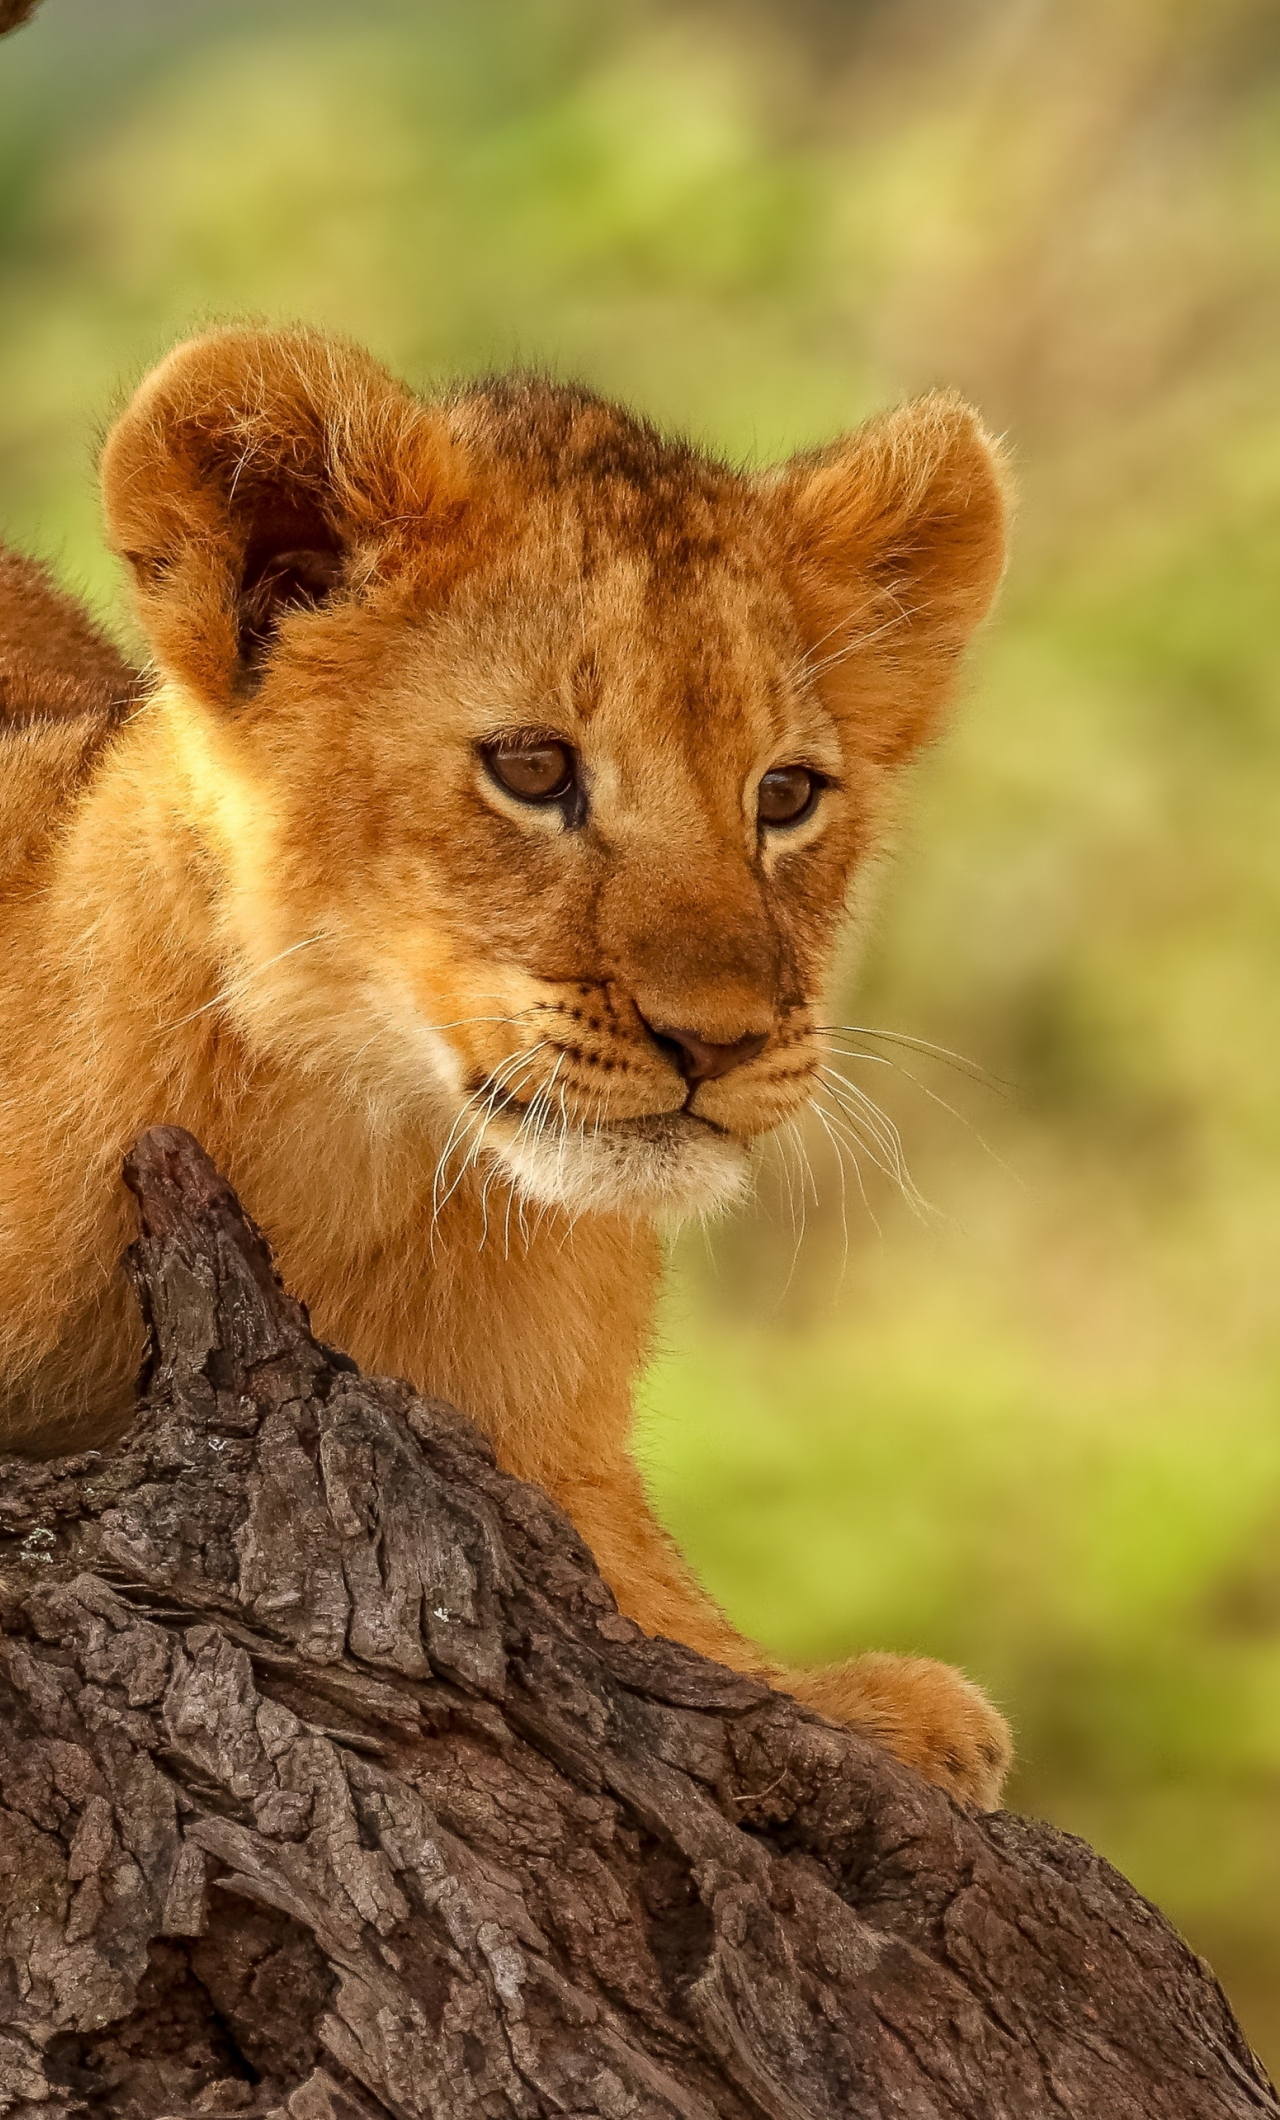 Download wallpaper 1280x2120 lion cub, cute, animal, iphone 6 plus ...